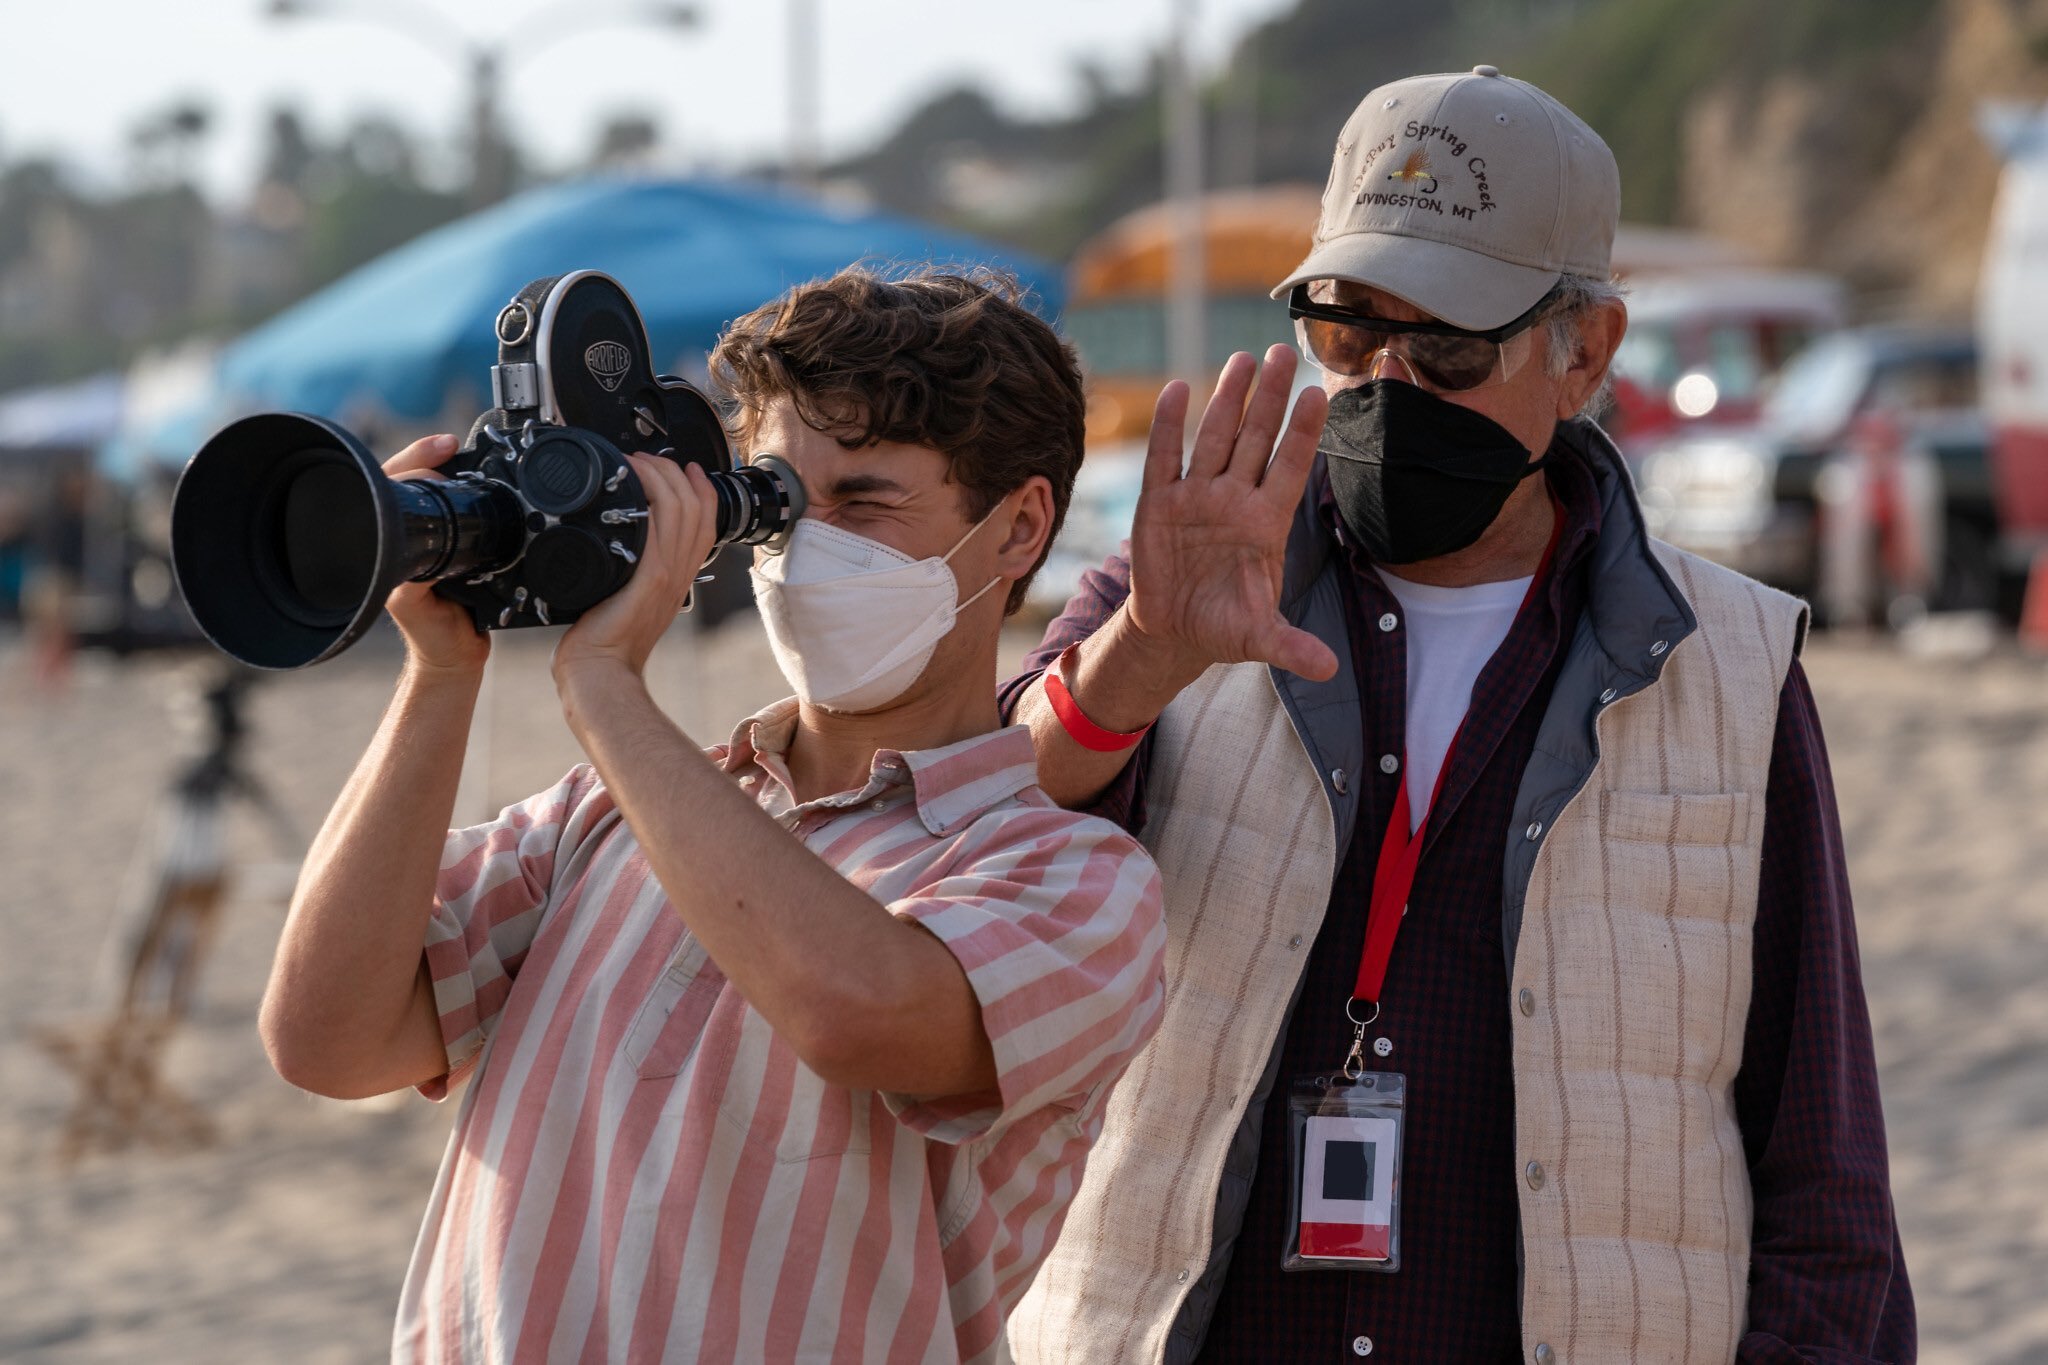 El Óscar se disputa entre Steven Spielberg y los Daniels. TWITTTER/@fgamizp